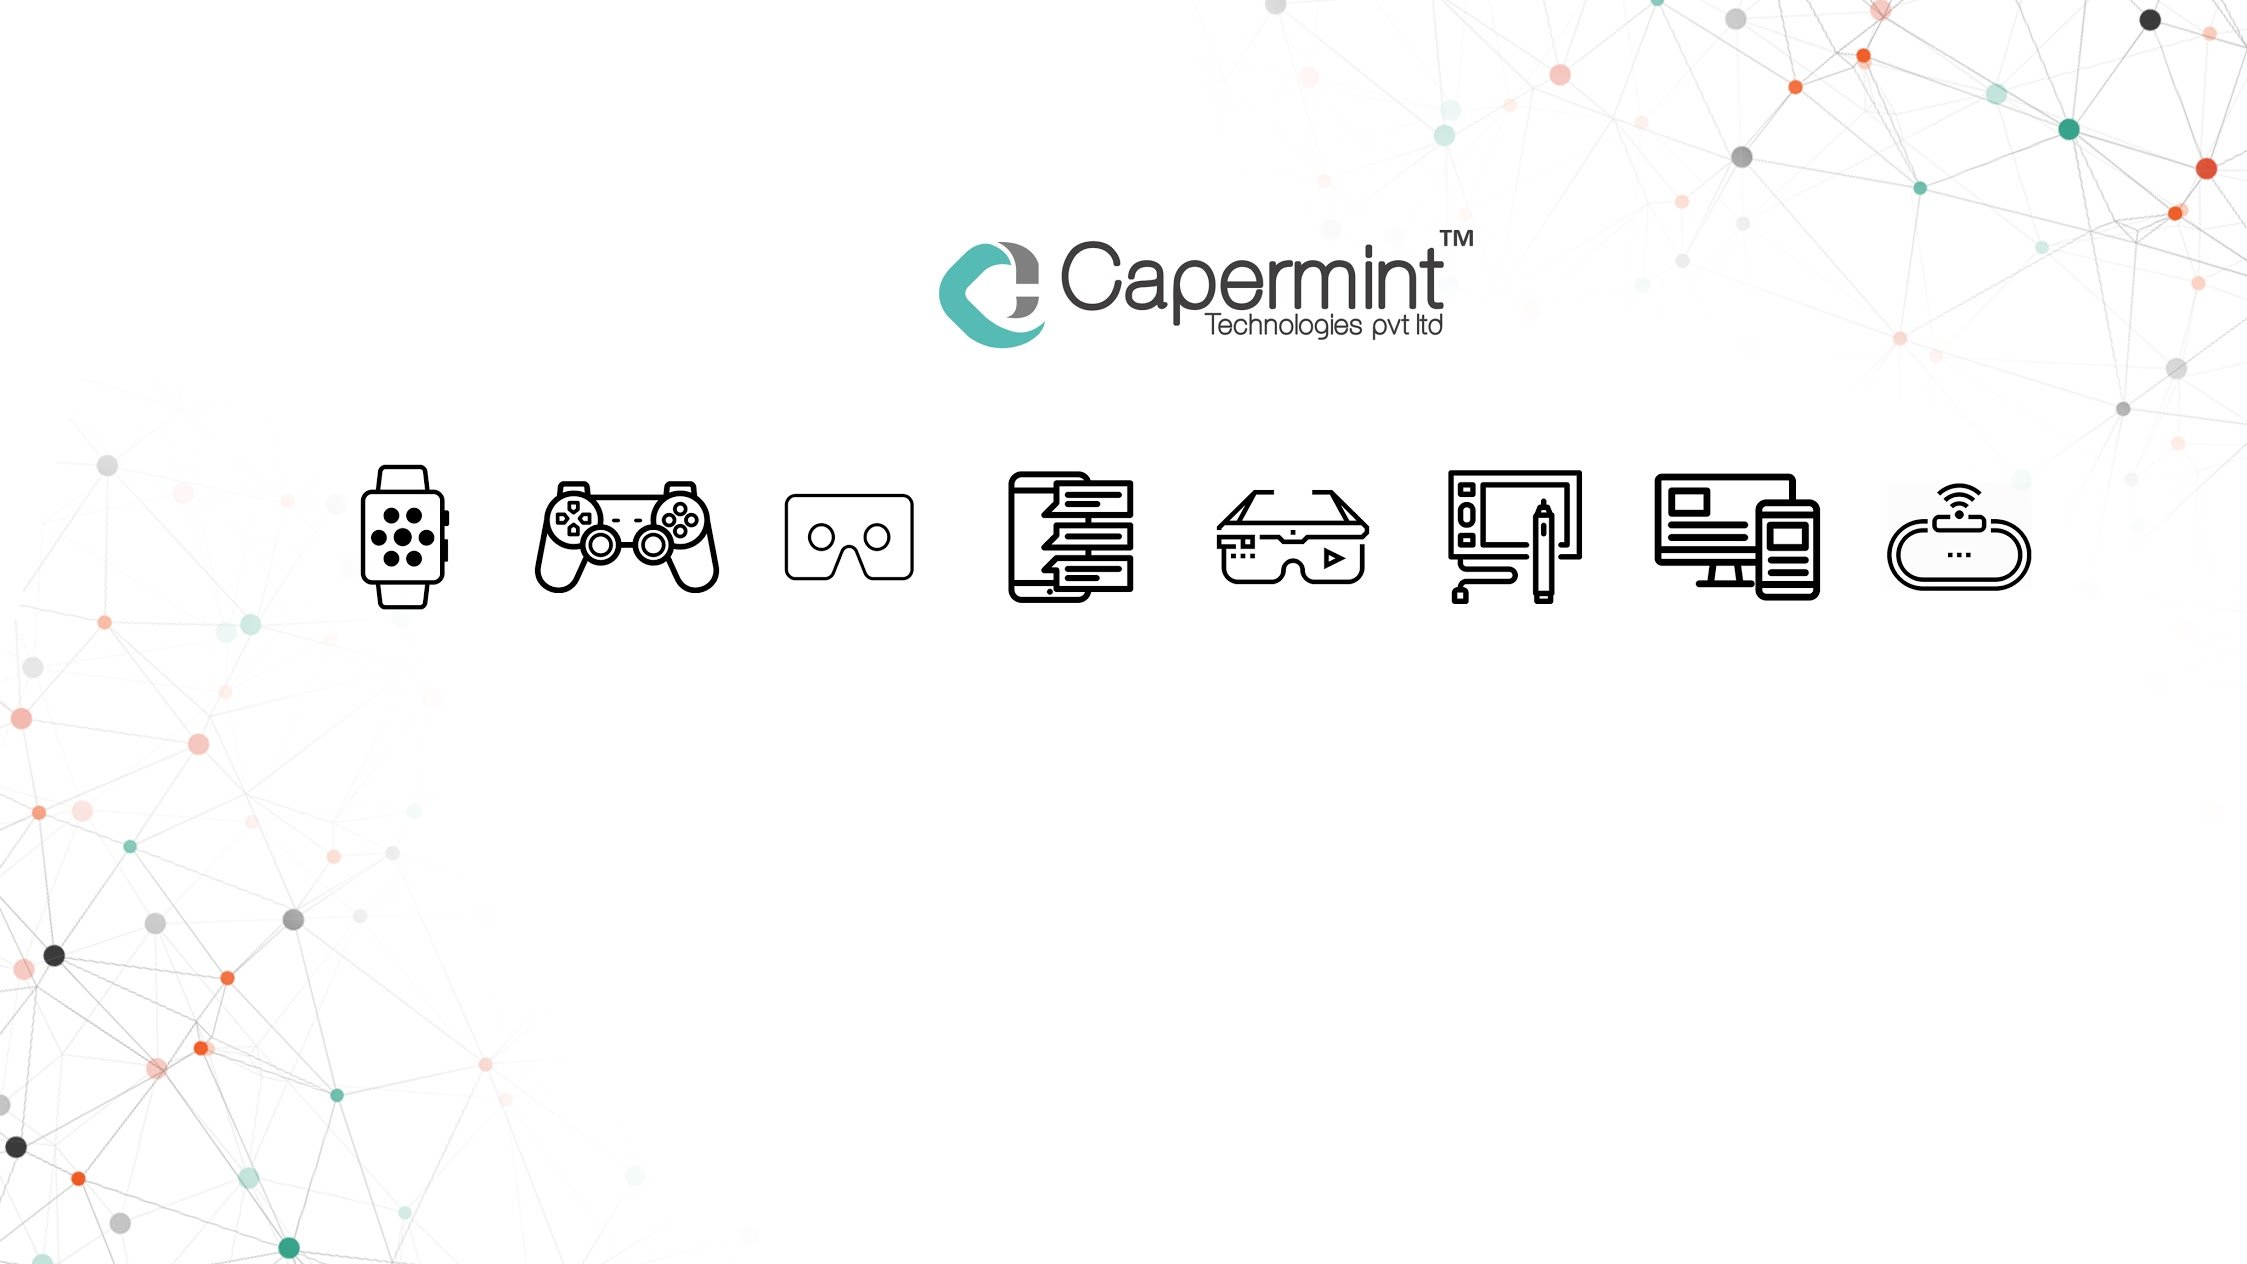 Capermint Technologies Pvt. Ltd. cover